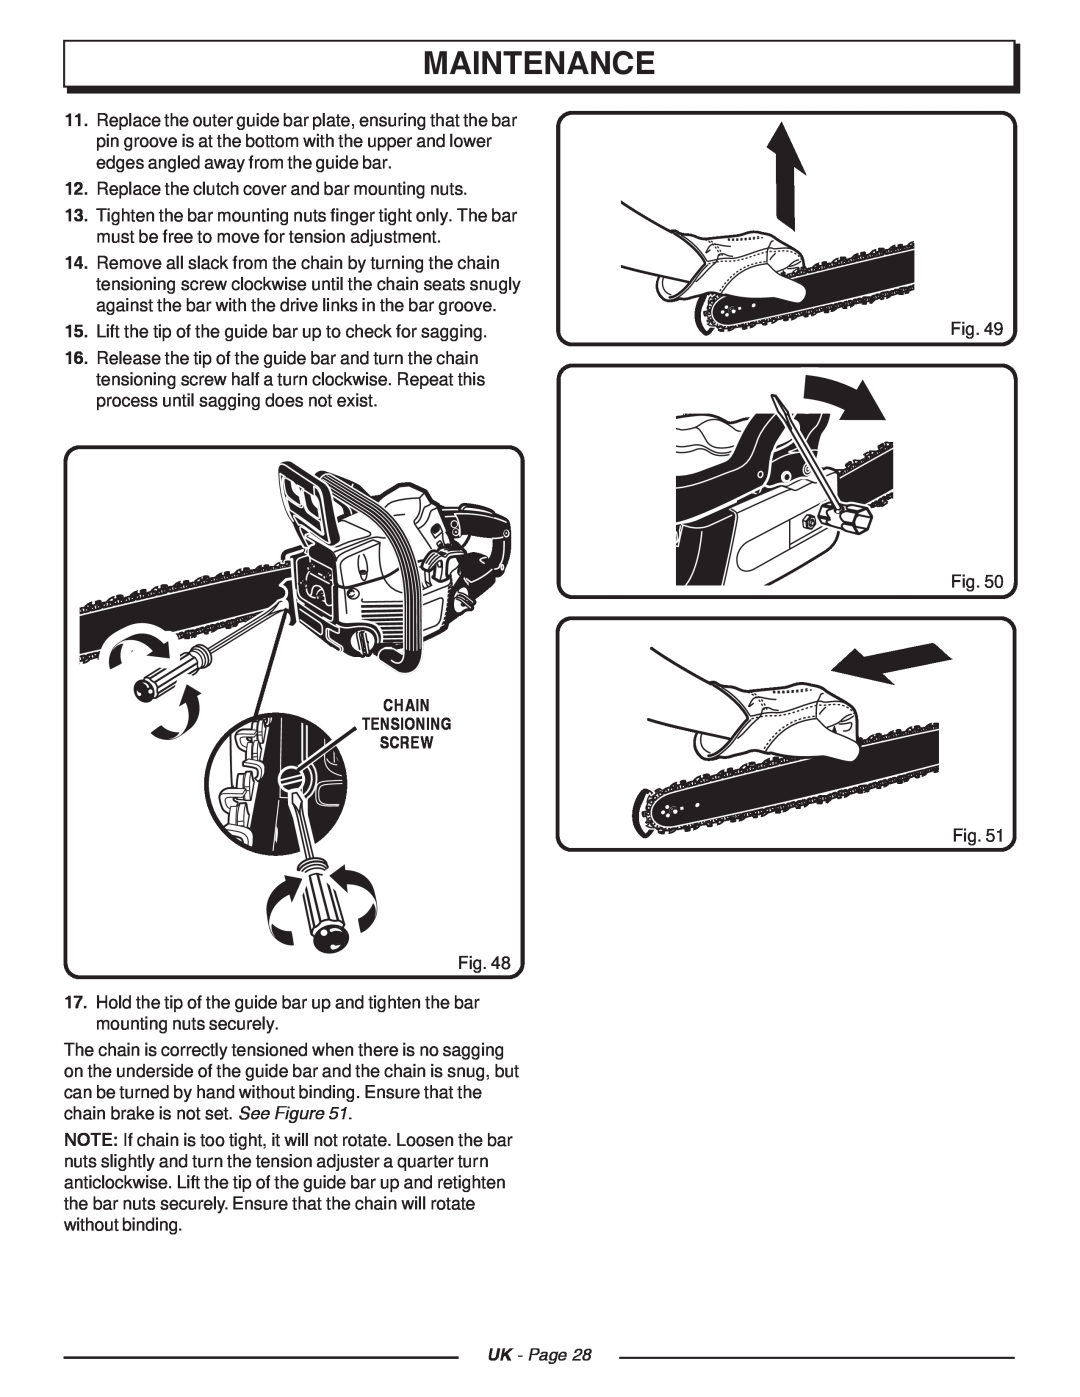 Homelite CSP3816, CSP4518 manual Chain Tensioning Screw, Maintenance, UK - Page 